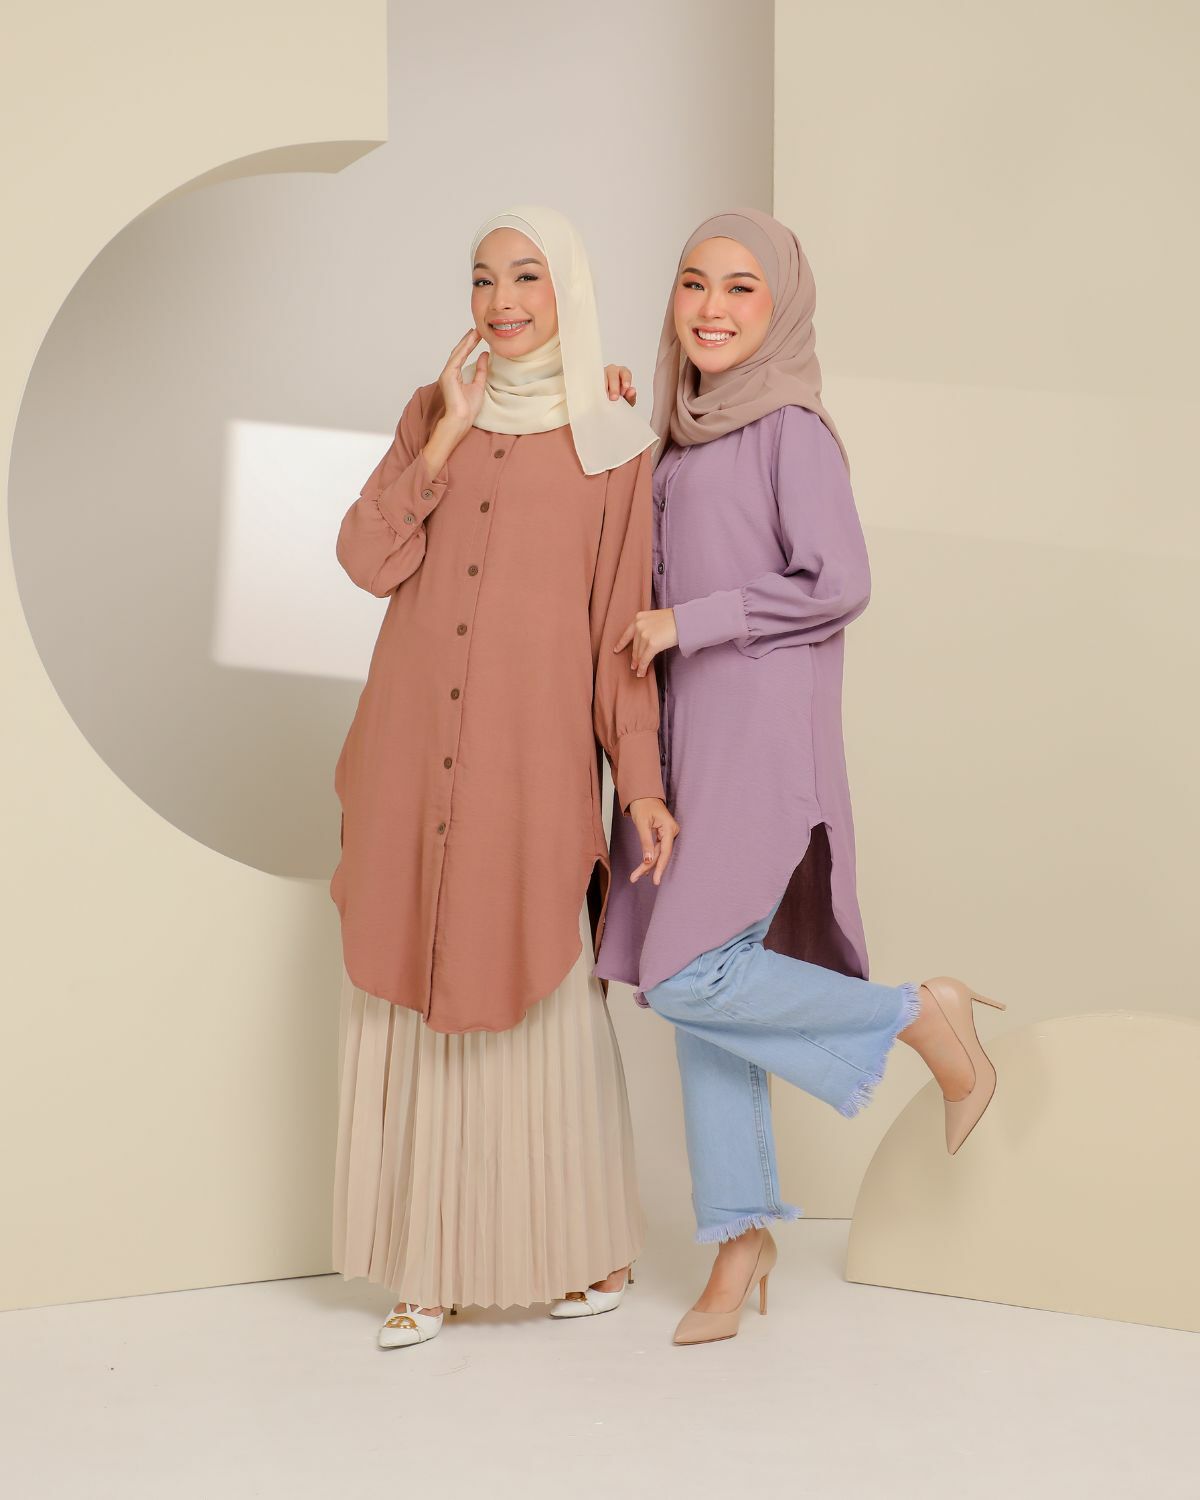 haura-wear-cotton-baju-muslimah-set-seluar-suit-muslimah-set-baju-dan-seluar-muslimah-palazzo (14)